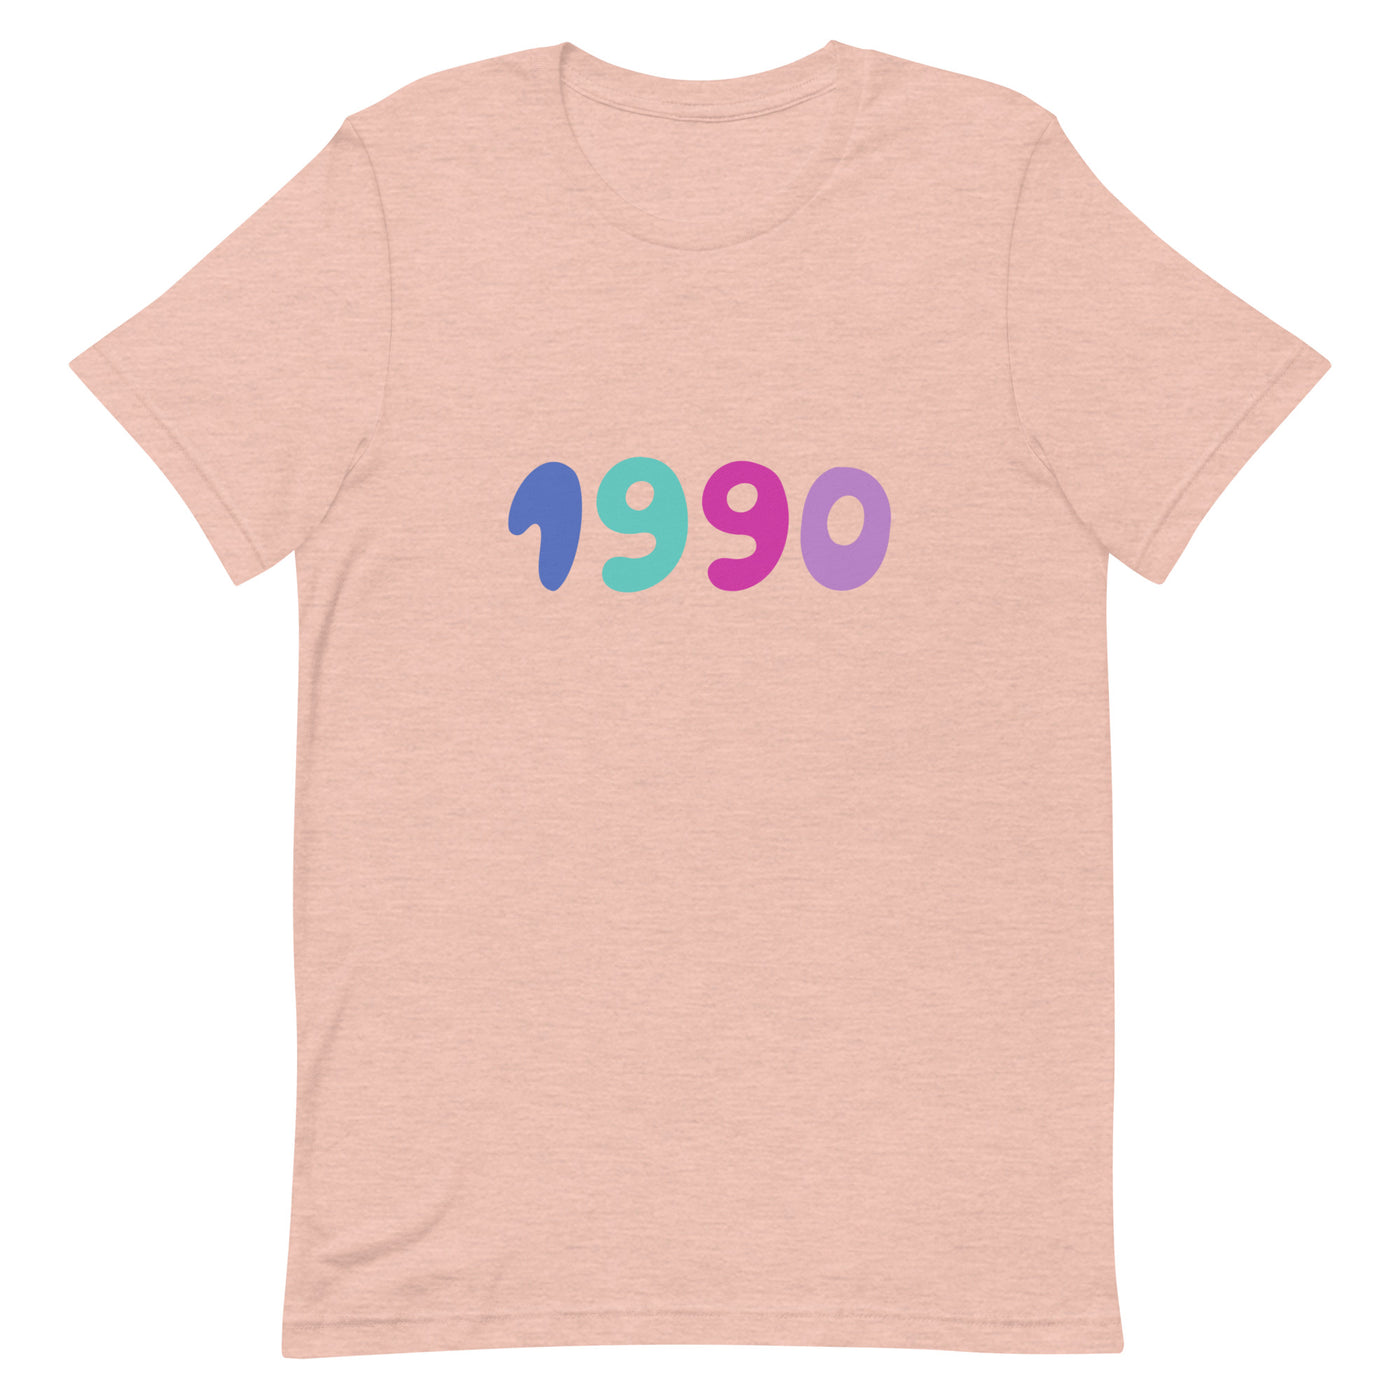 1990' Unisex t-shirt